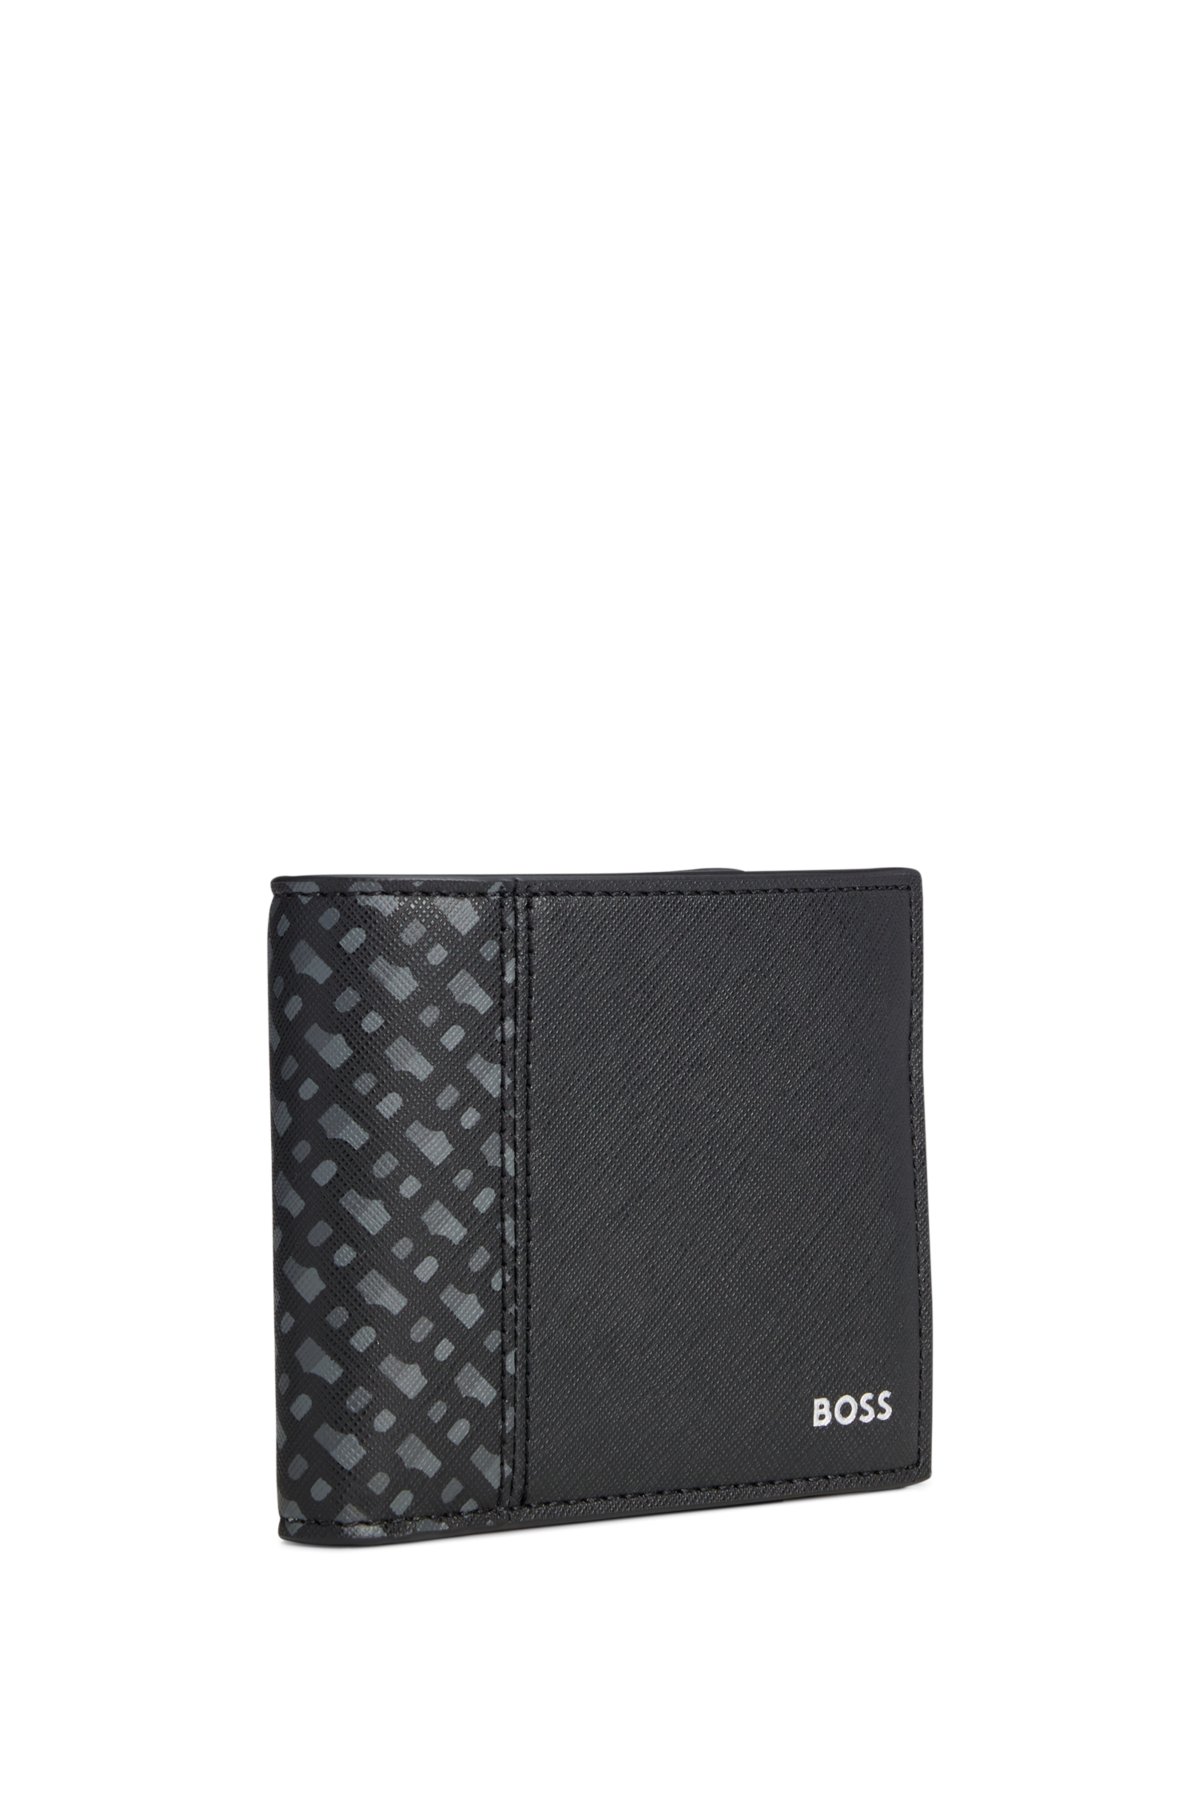 Structured wallet with monogram detailing, Black